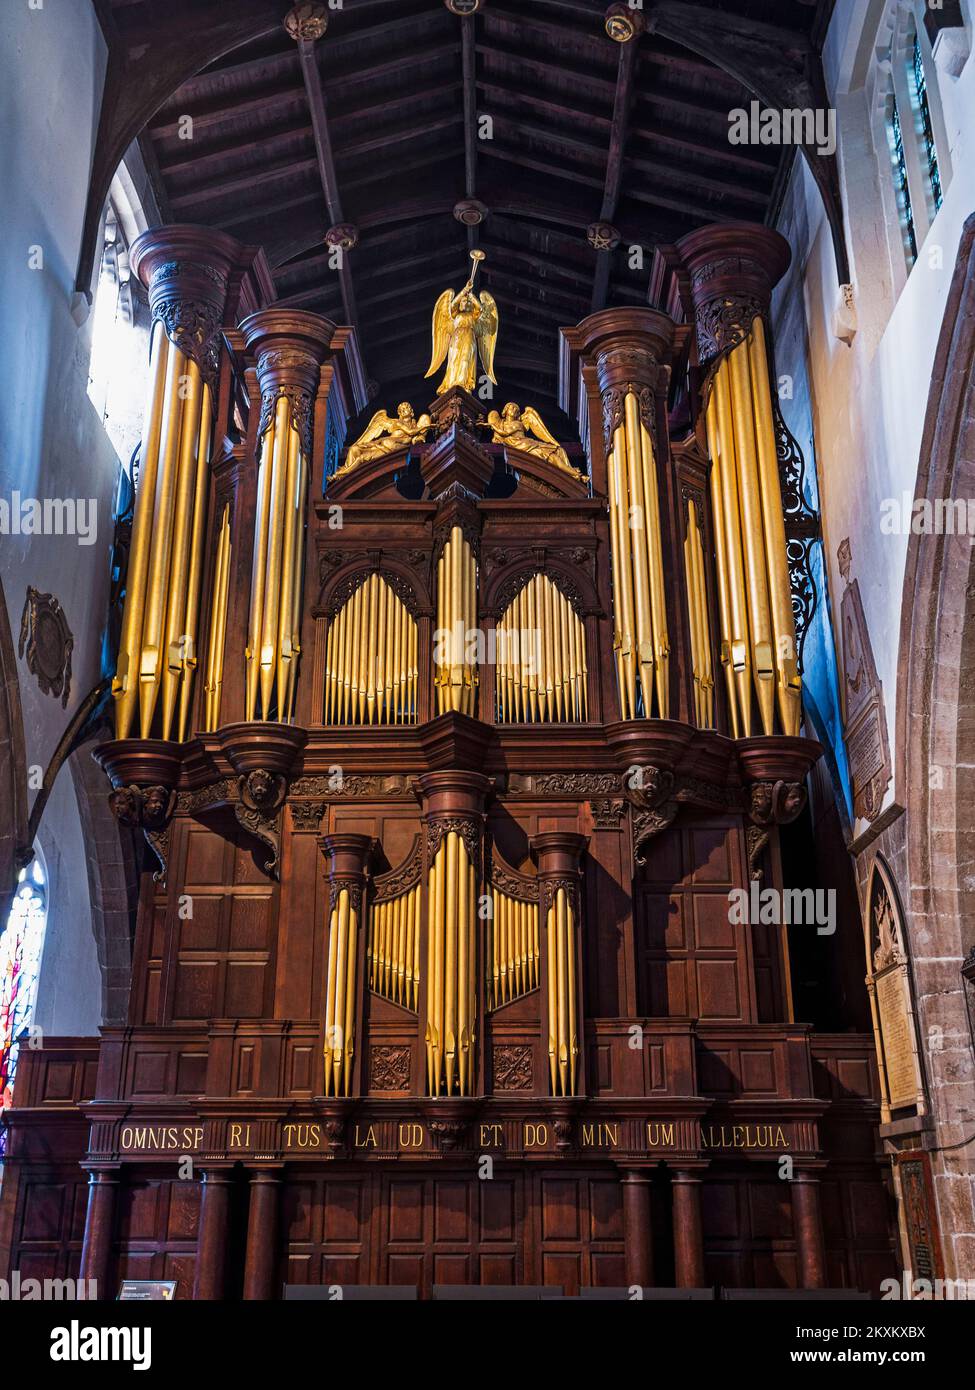 Organ of St Nicholas Cathedral, Newcastle upon Tyne, UK Stock Photo